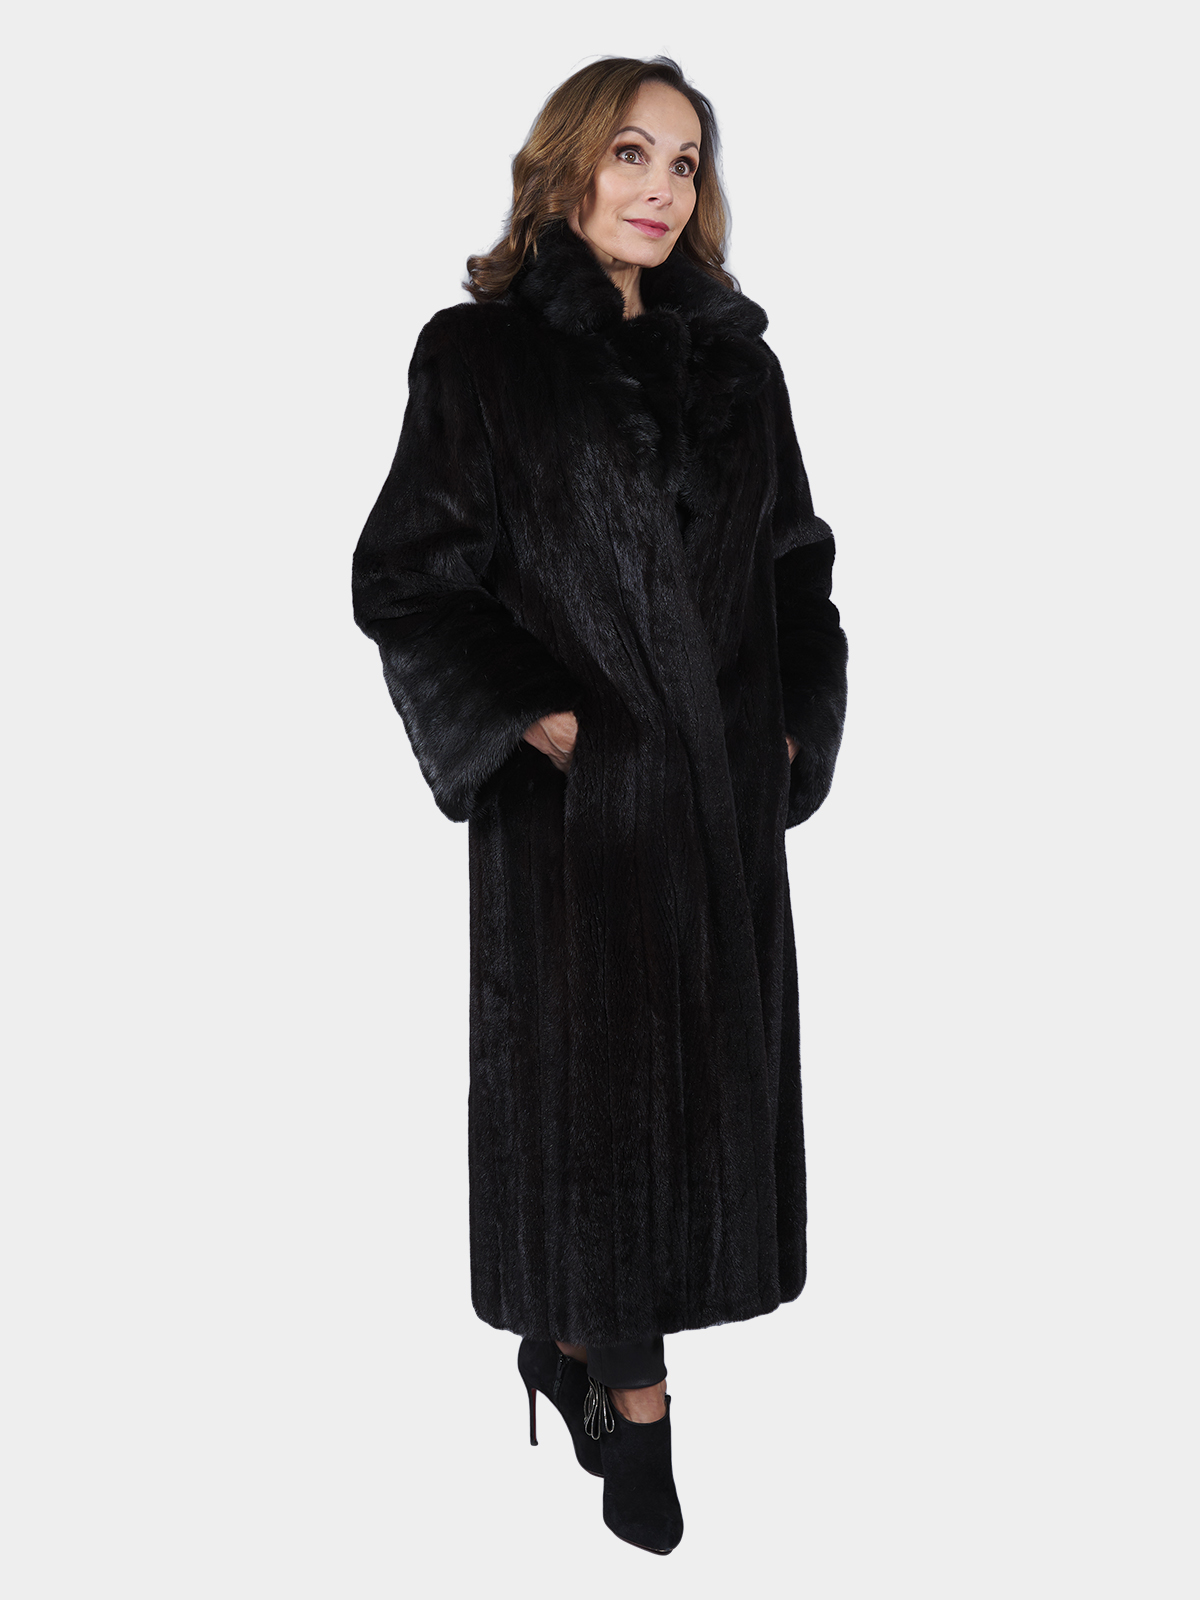 Ranch Semi Sheared Mink Fur Coat - Woman's Small | Estate Furs